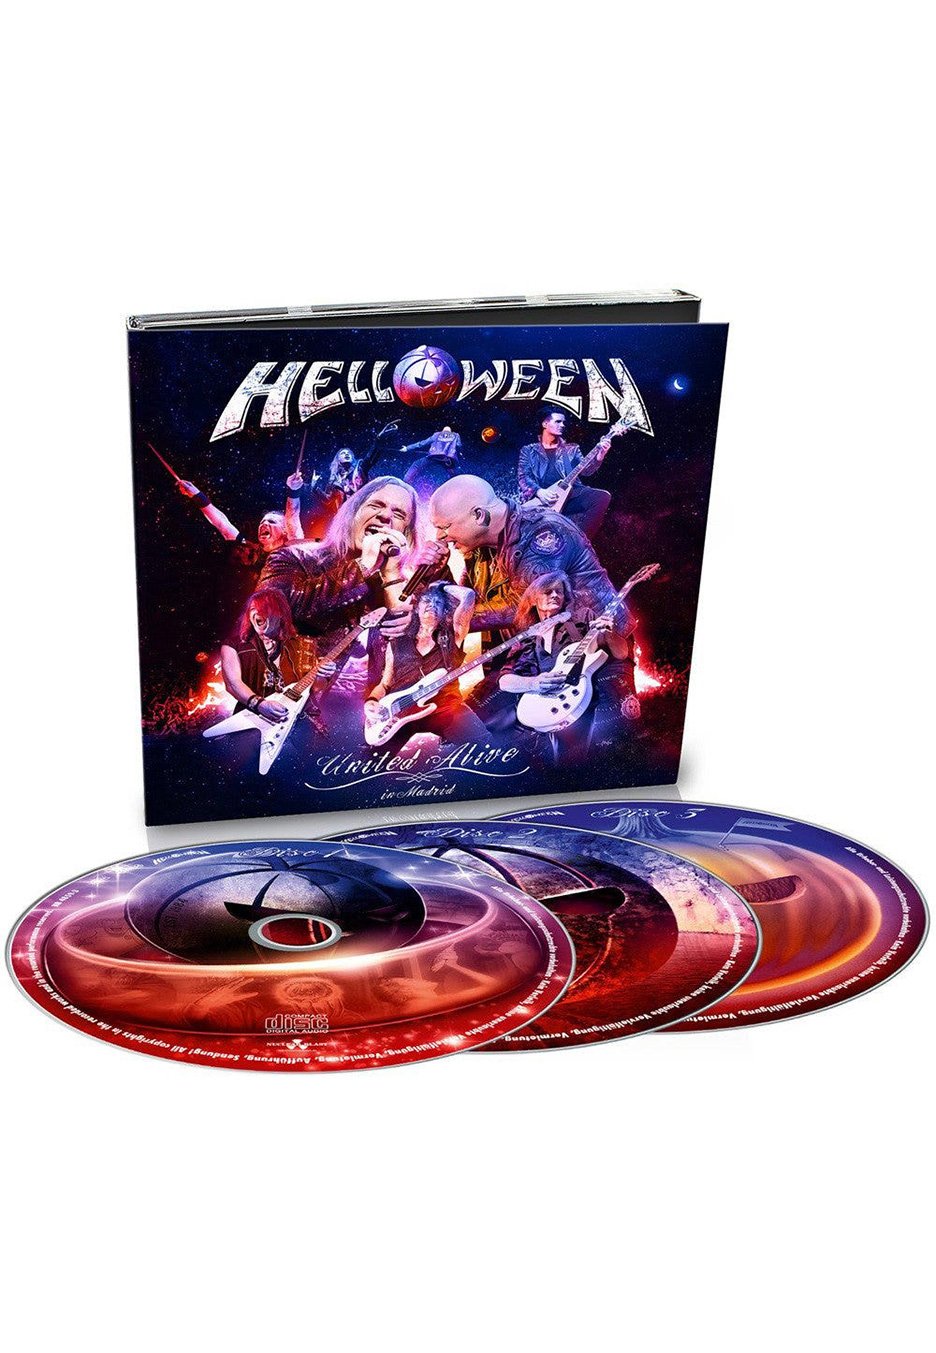 Helloween - United Alive In Madrid - Digipak 3 CD